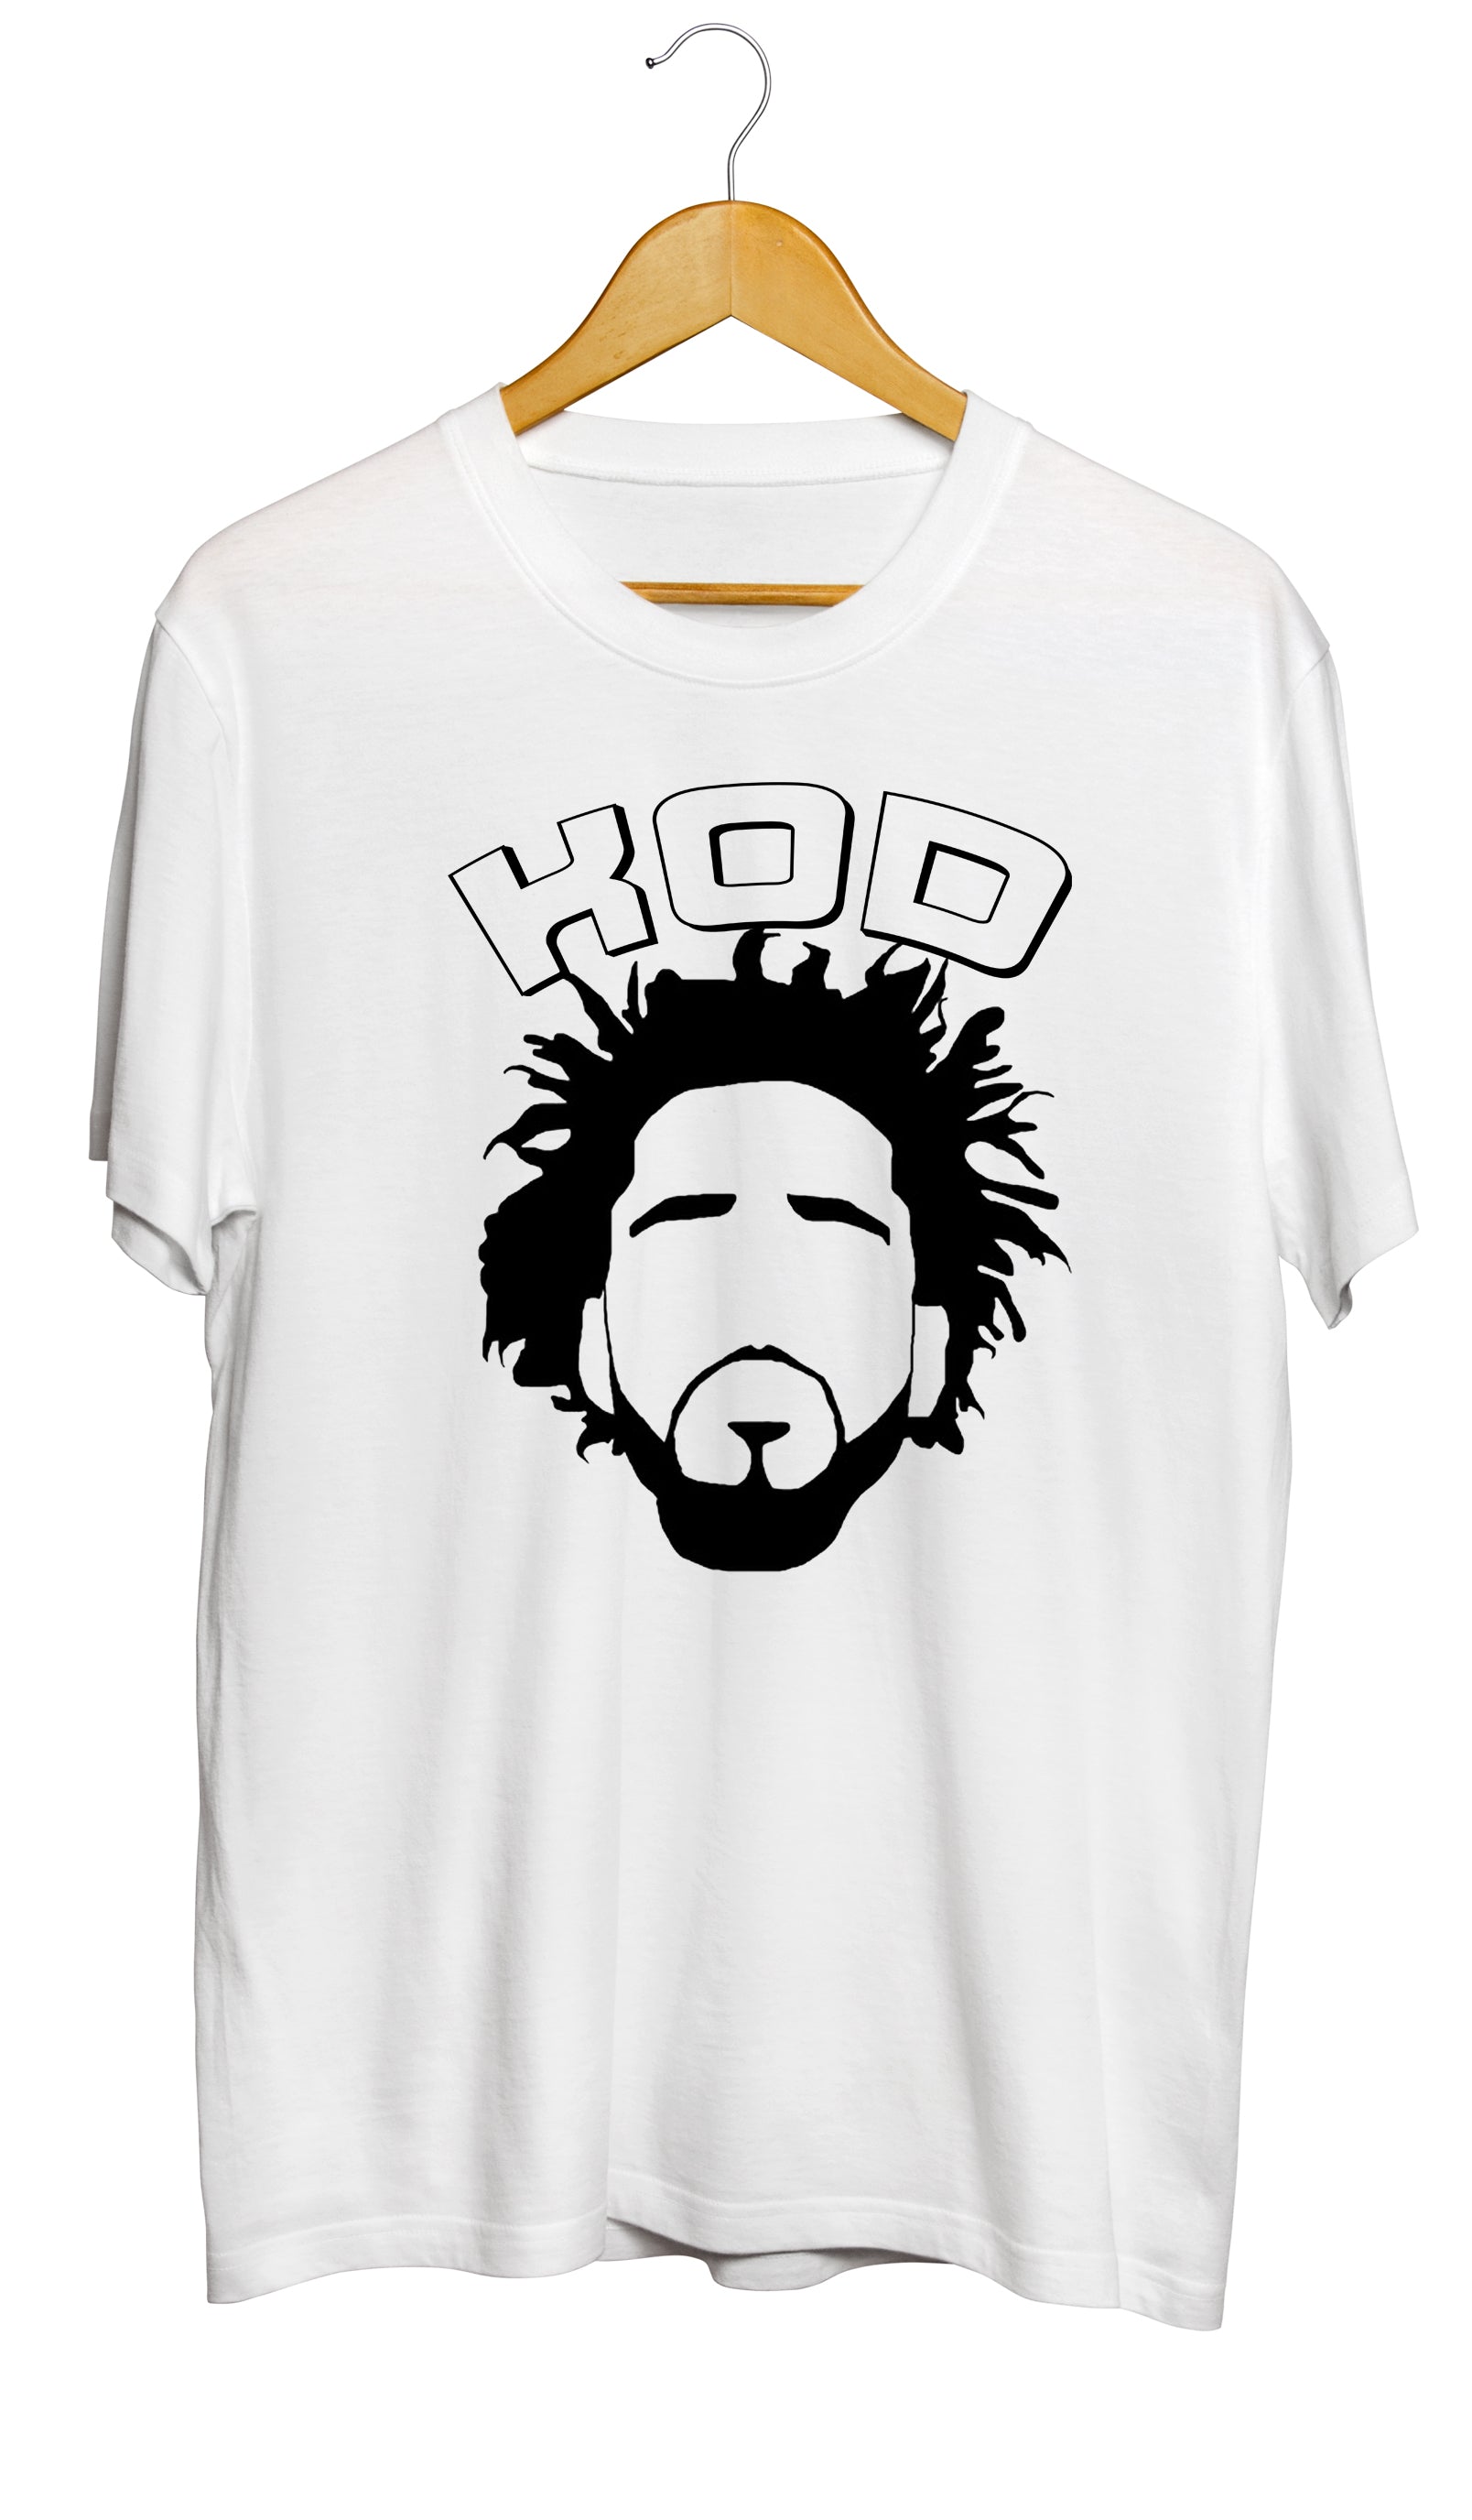 J Cole/K.O.D. T-Shirt - Ourt